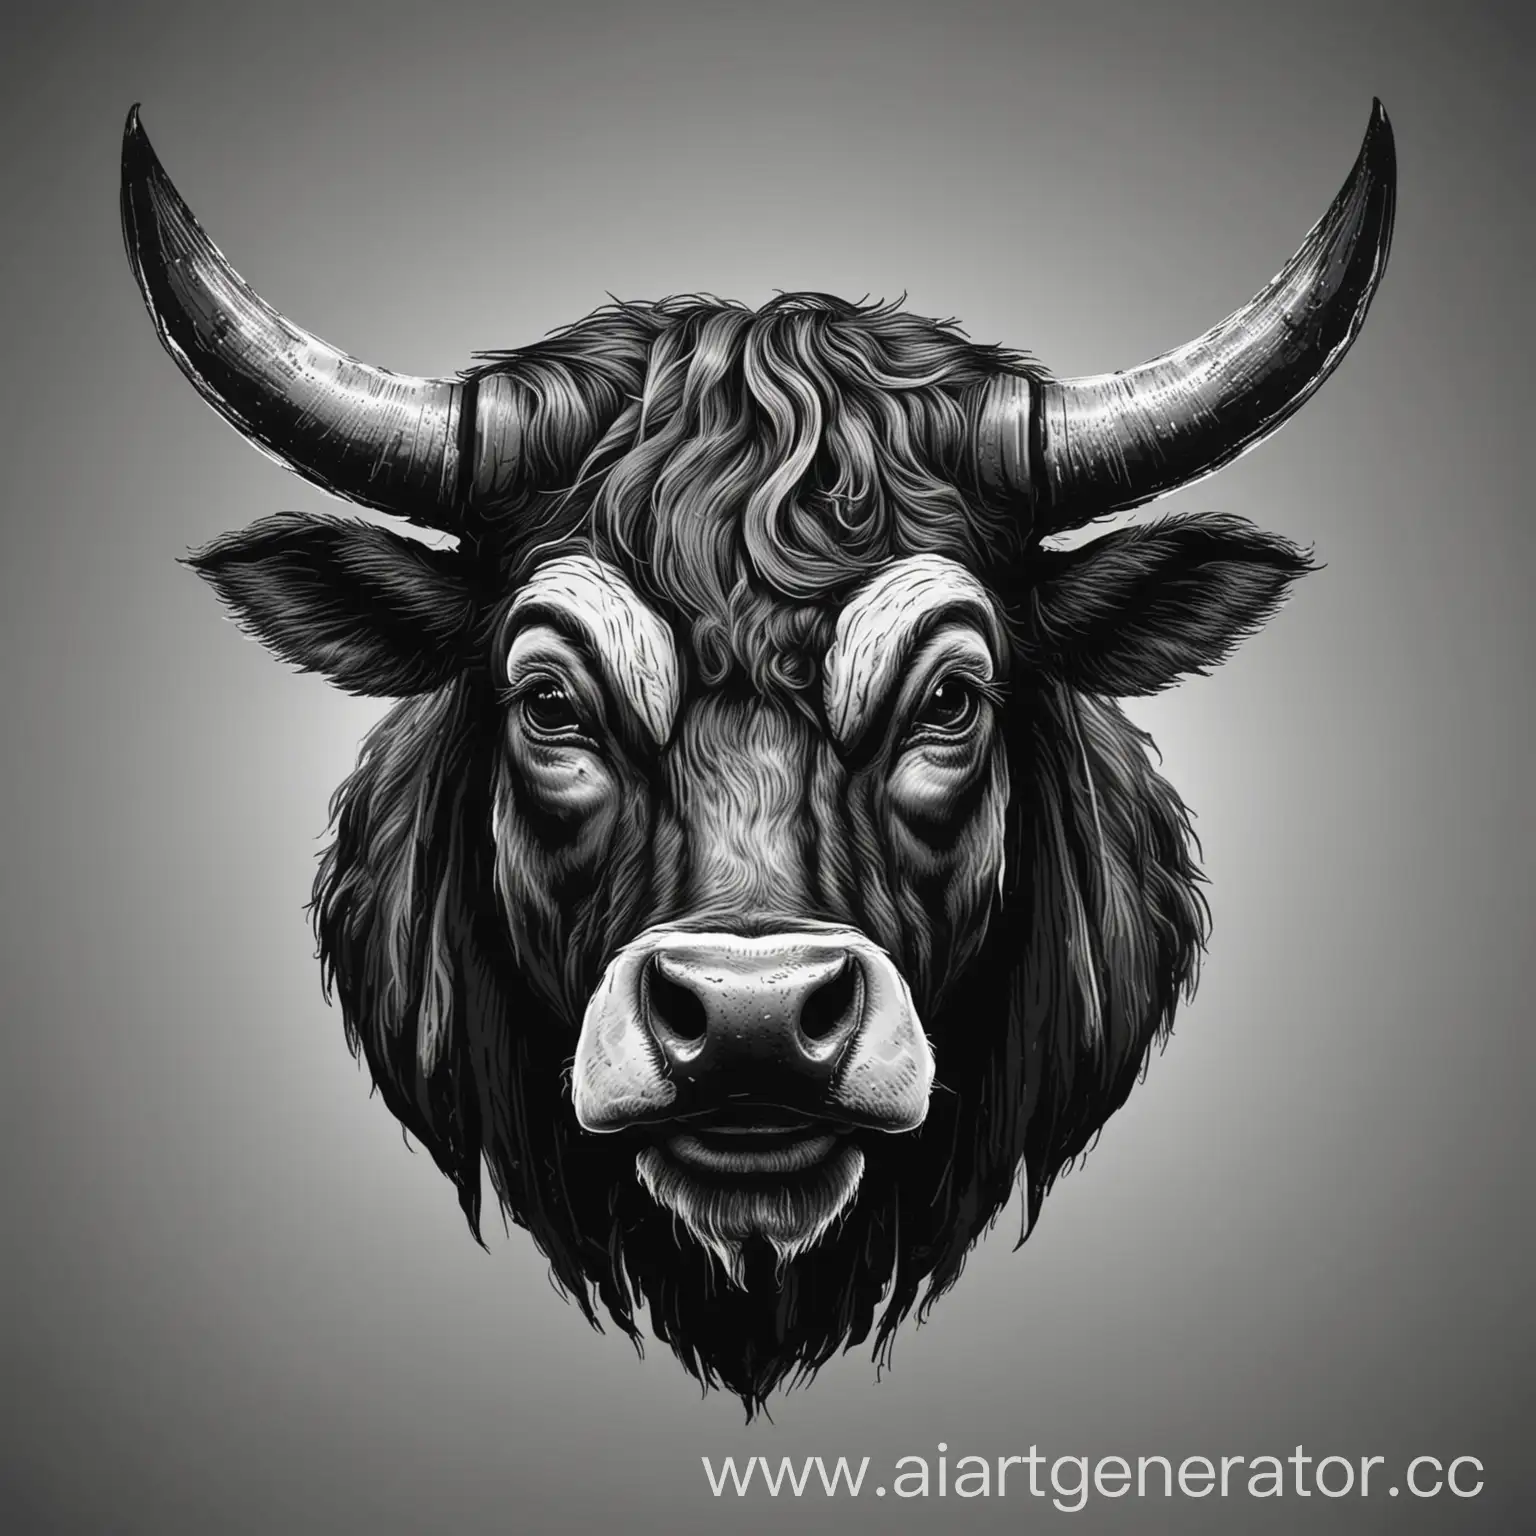 Bull's head black and white vector